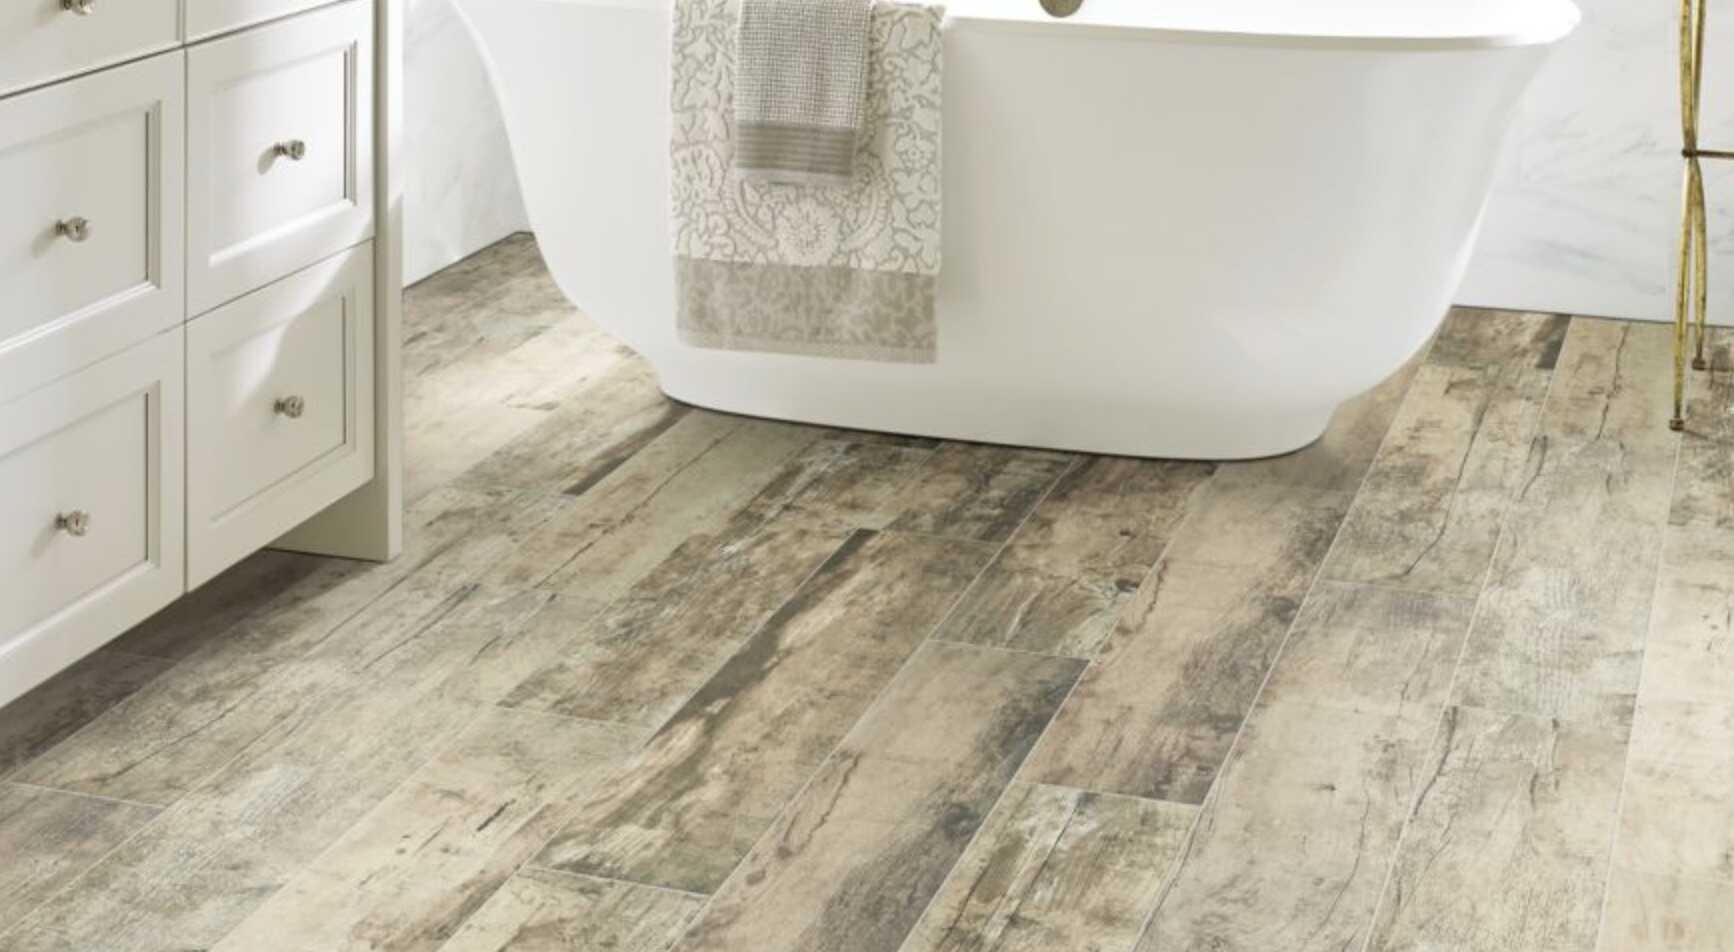 Waterproof Vinyl Plank Floorscapes Inc, Can Waterproof Vinyl Plank Flooring Be Used In Bathrooms